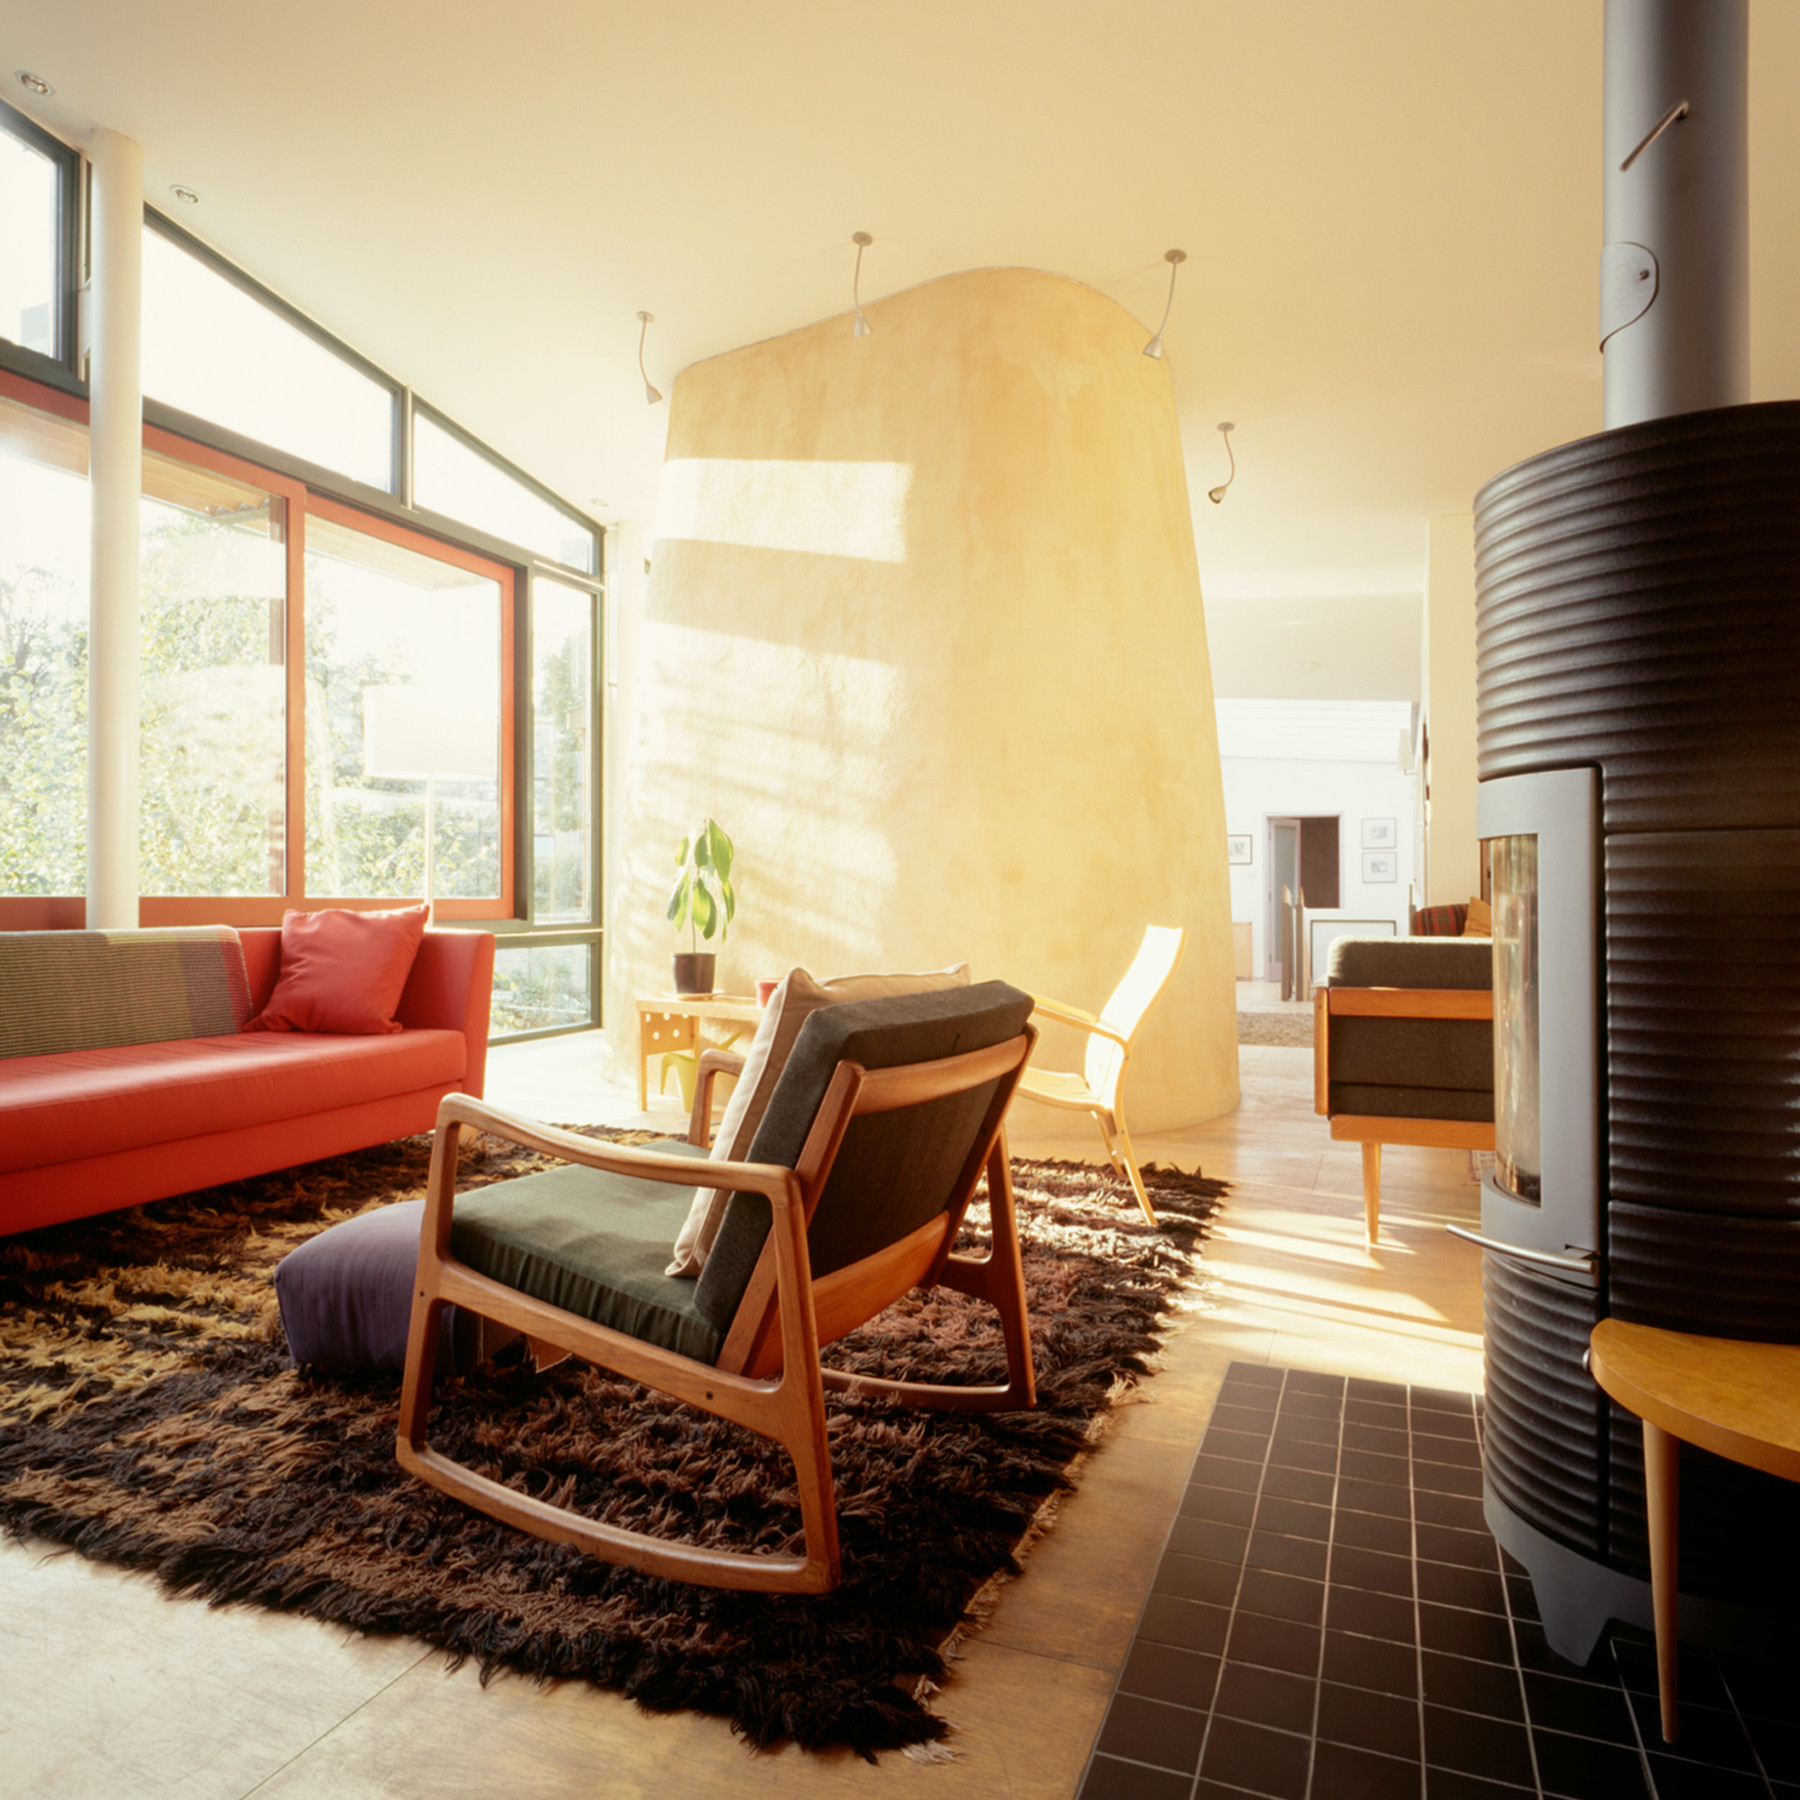 Sarah-Wigglesworth-Architects Stock Orchard Street living room 3600.jpg